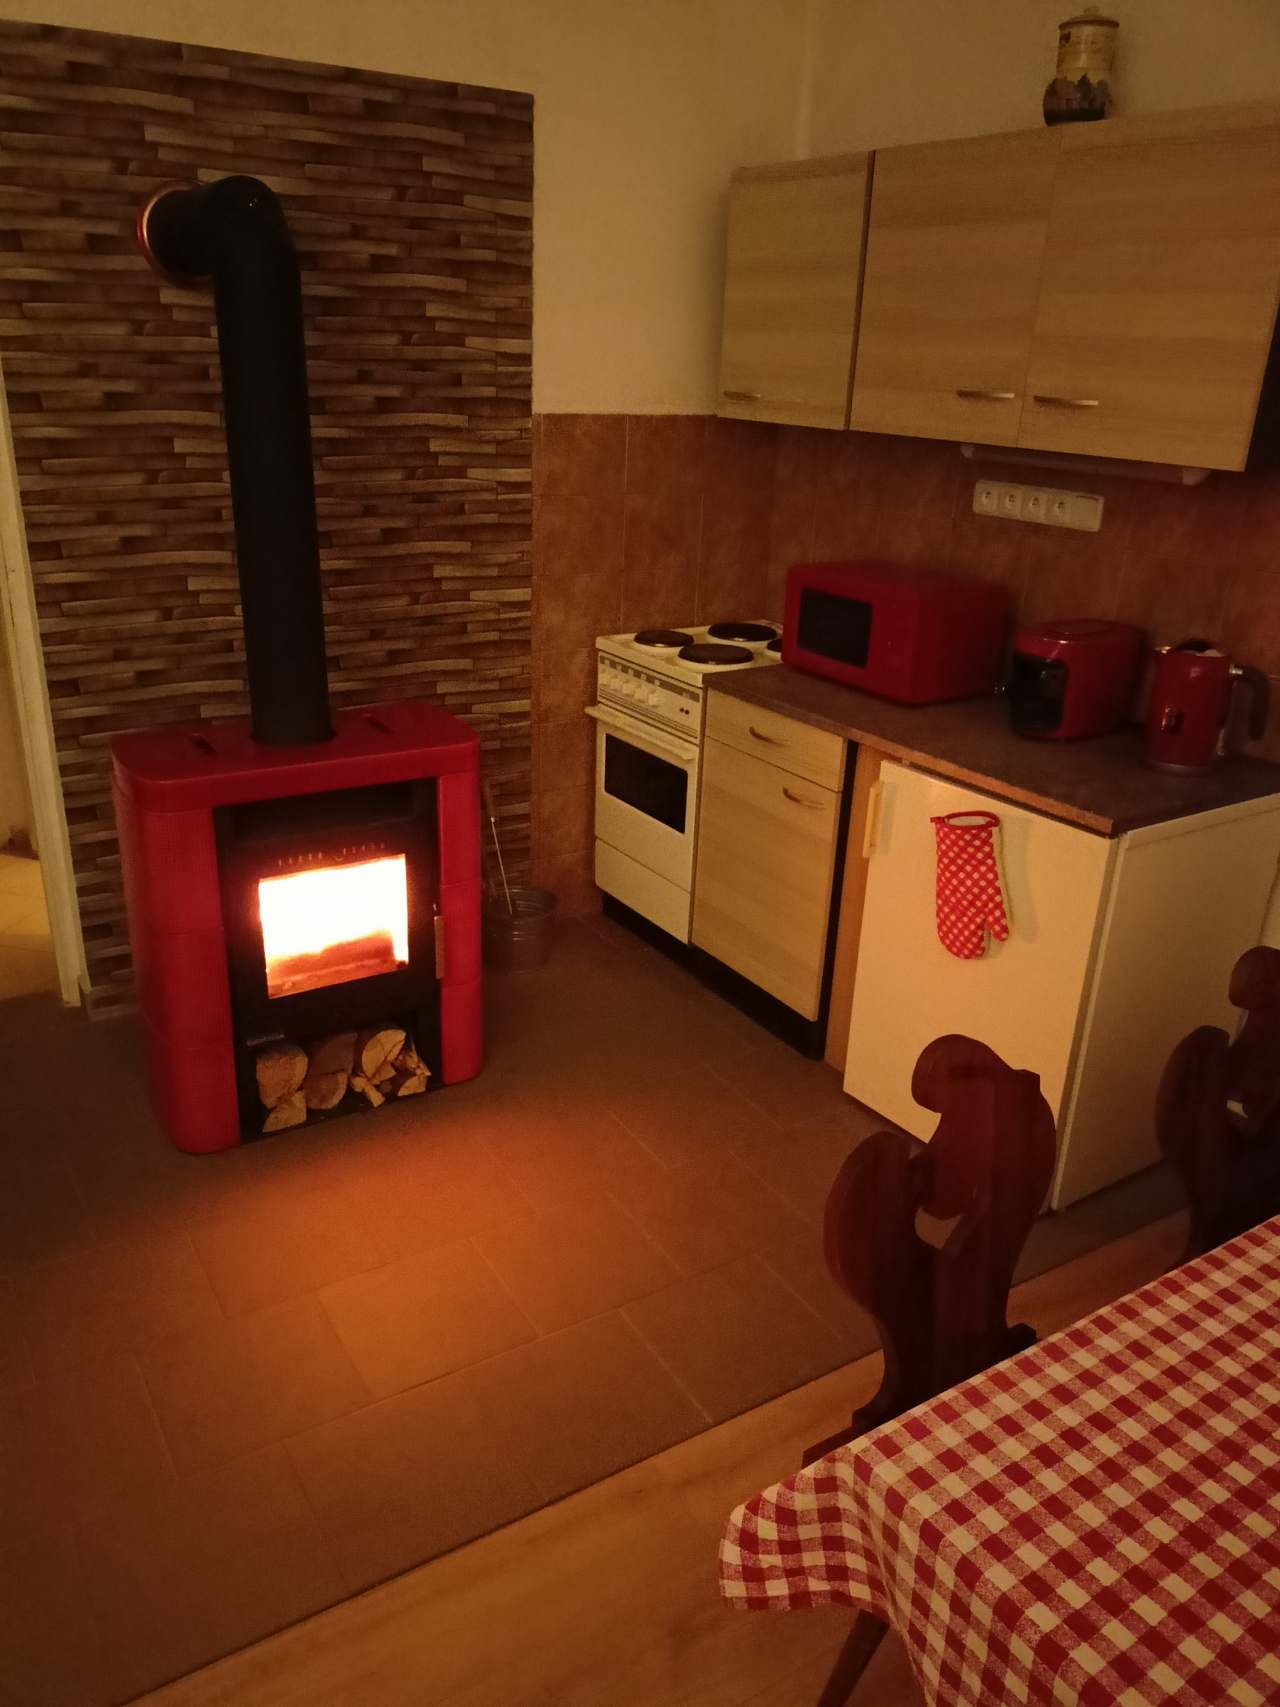 1st apartment-stove